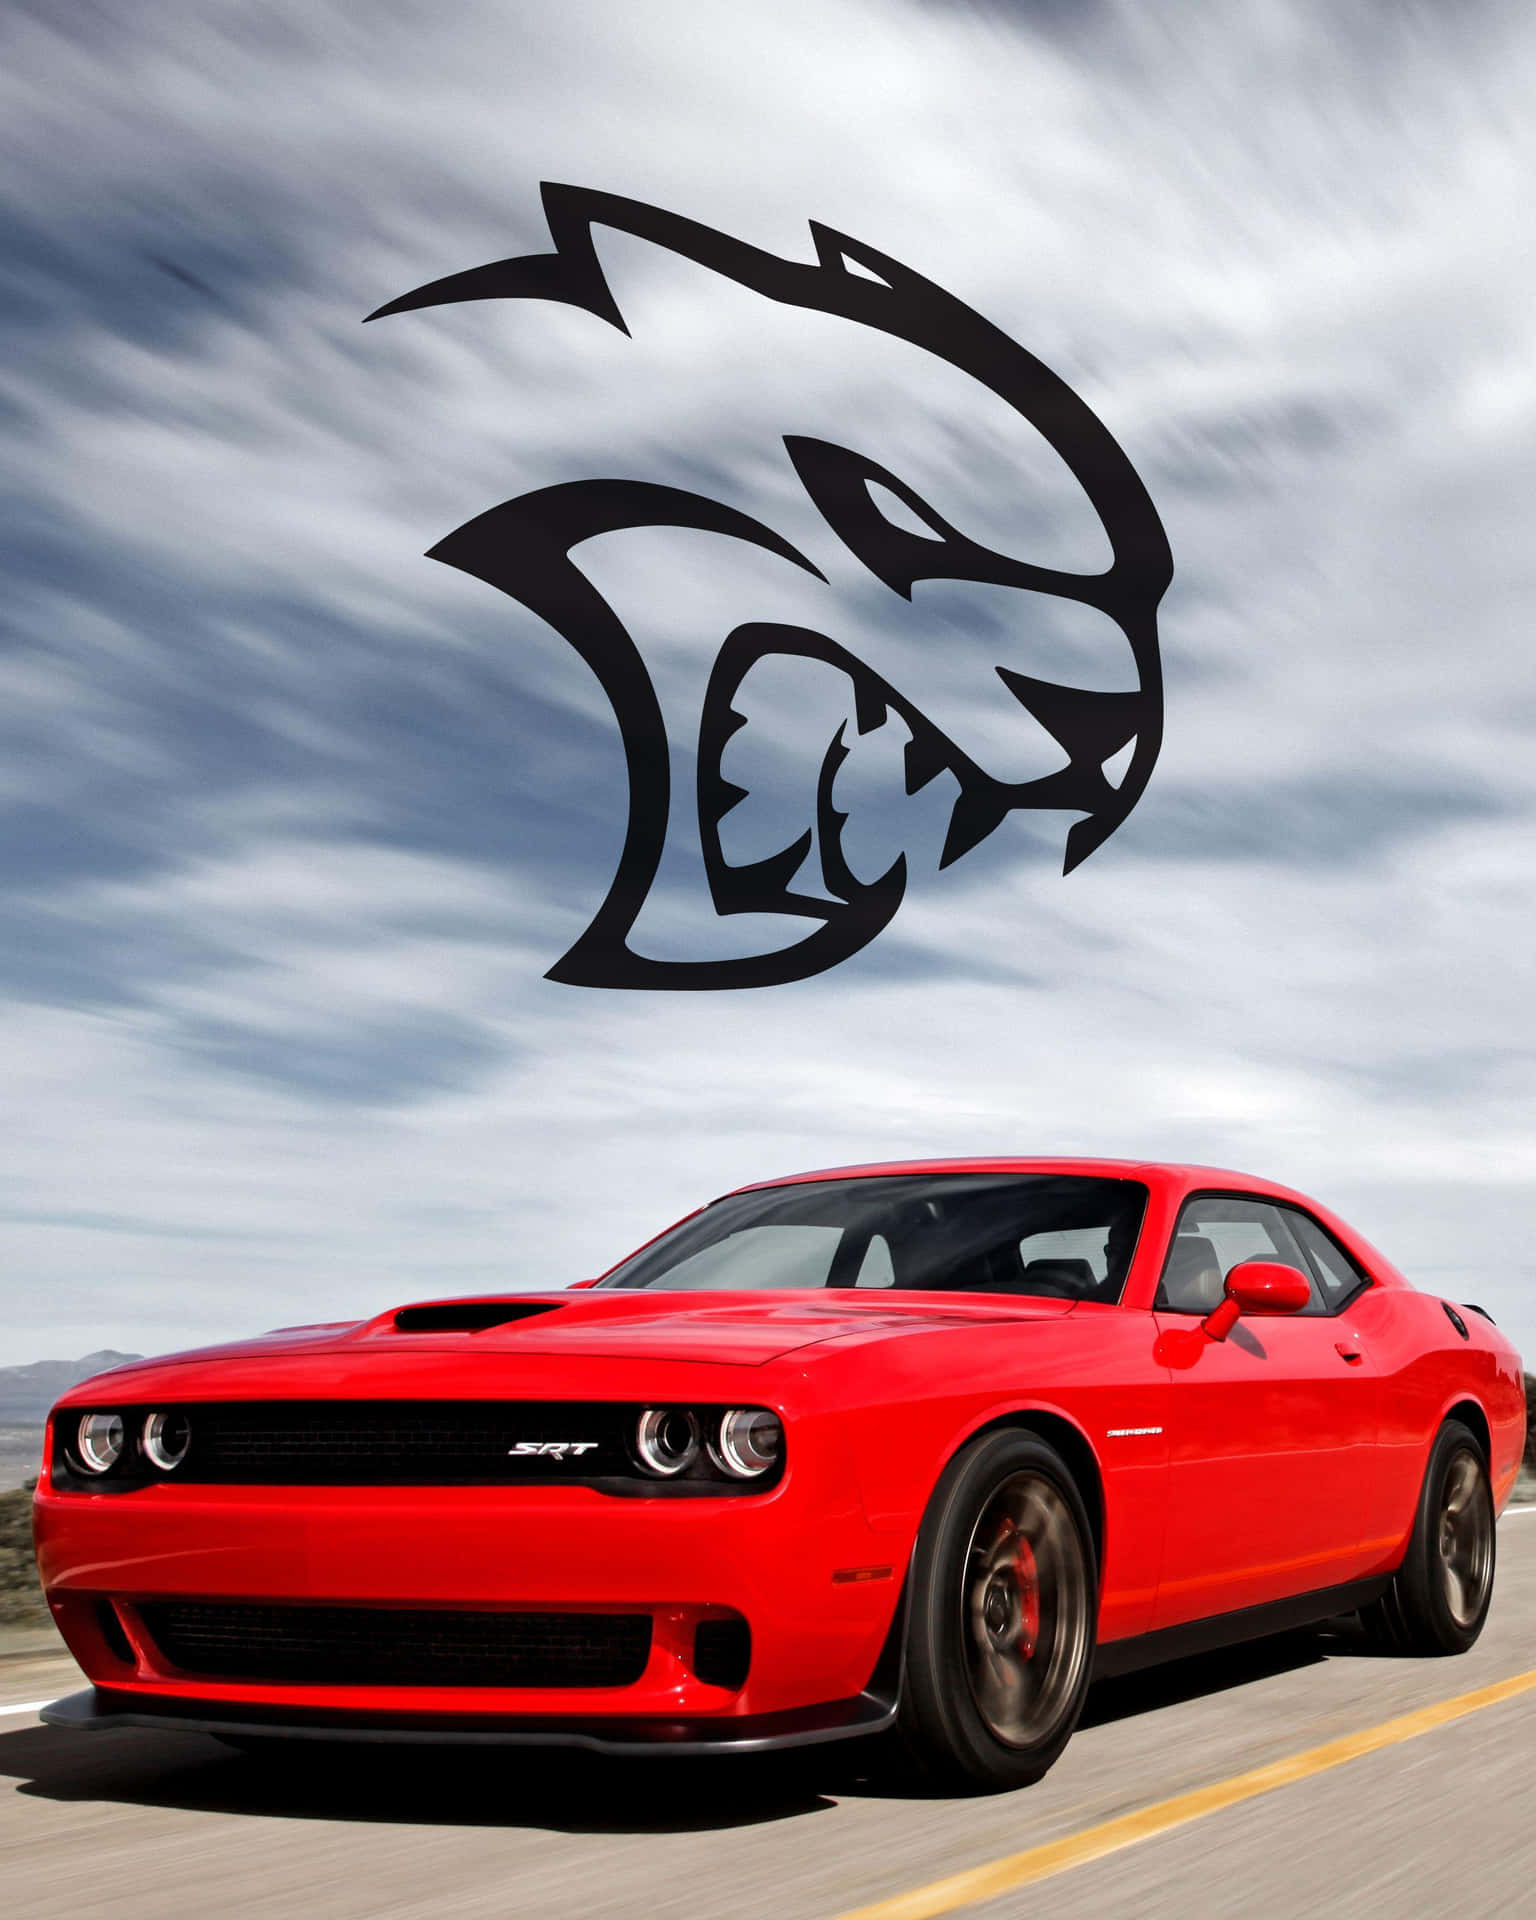 Dodge Challenger Srt - A Red Car With A Tiger Logo